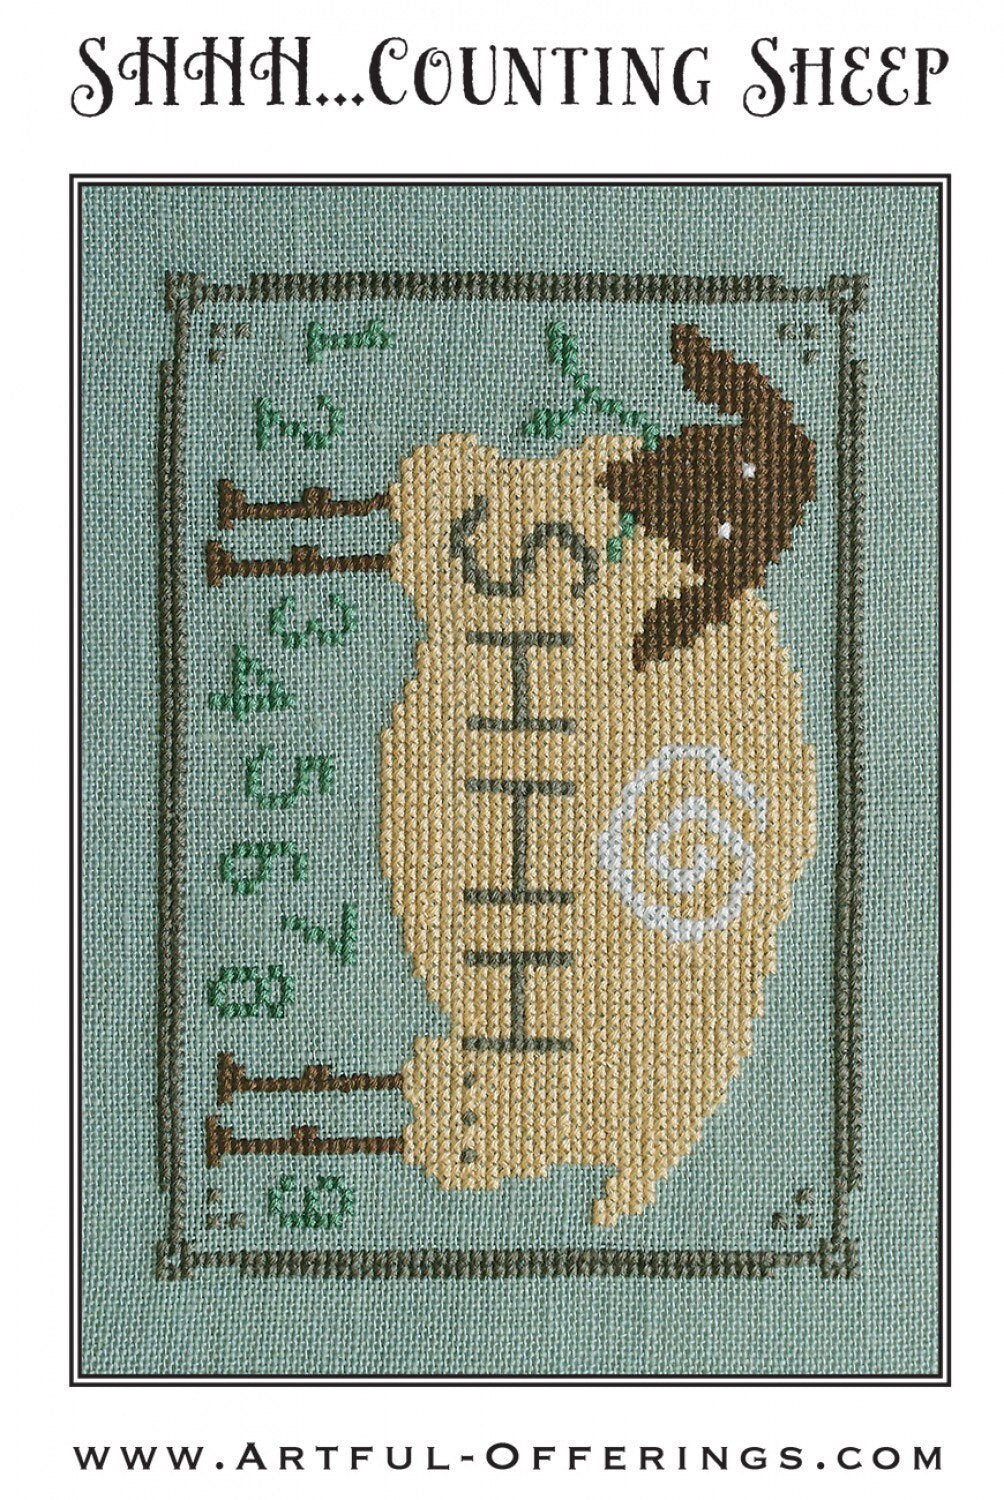 Shhh Counting Sheep Cross Stitch Pattern - Artful Offerings - Karina Hittle